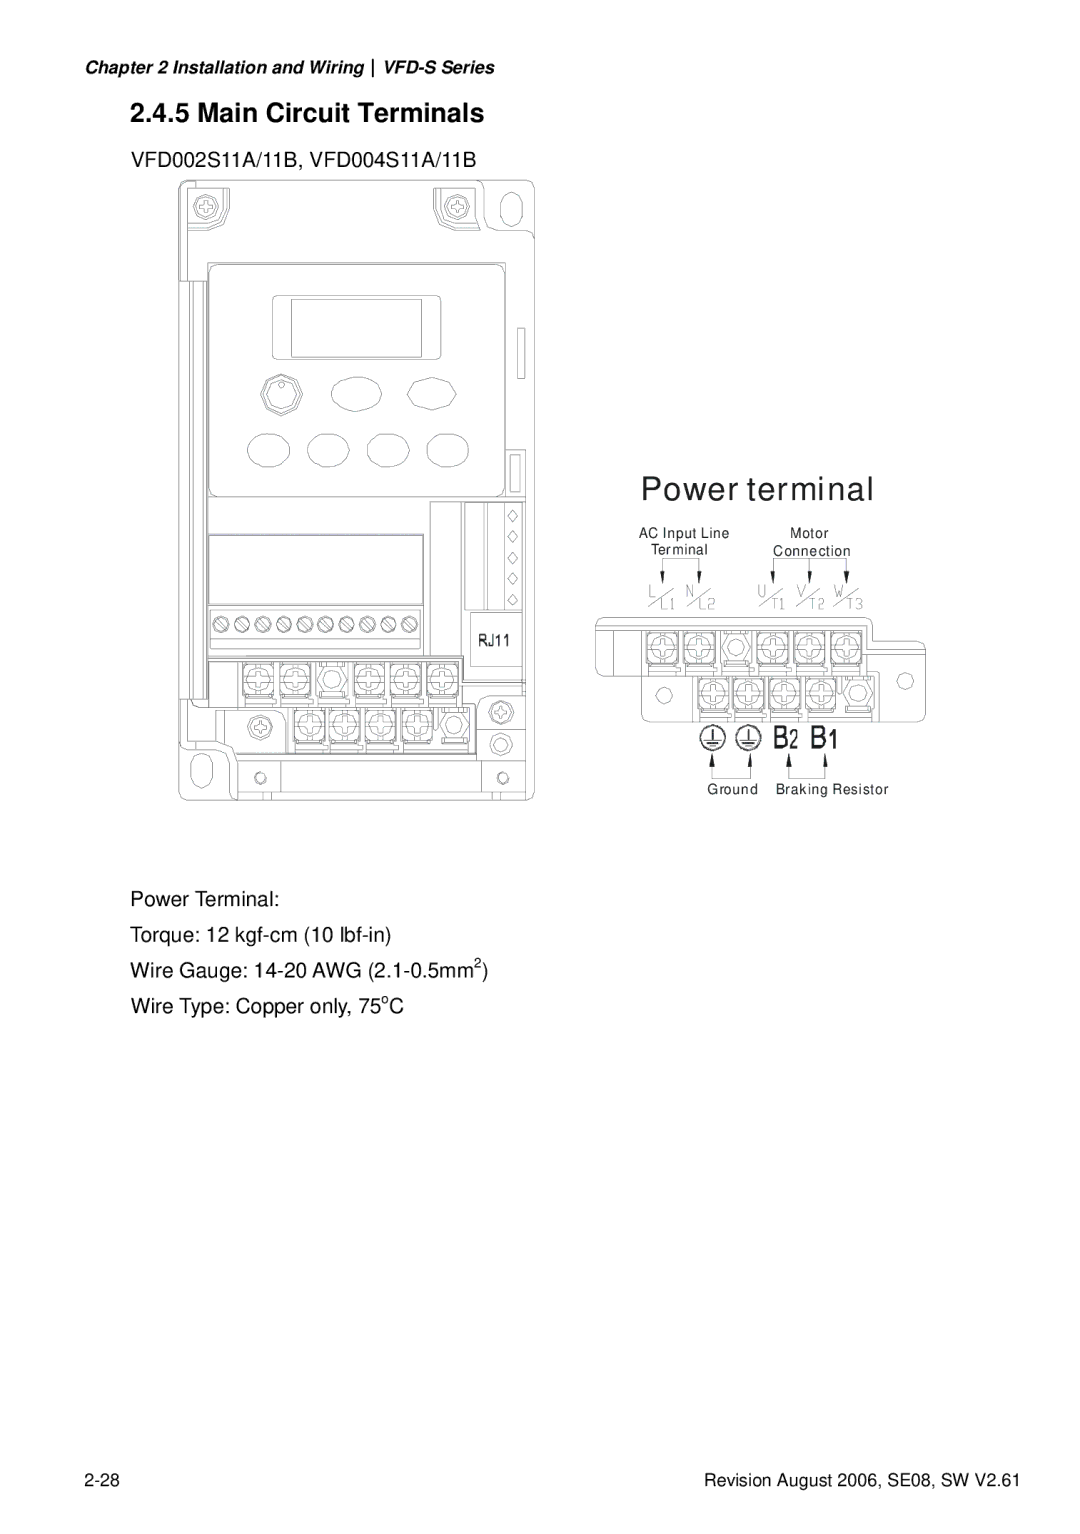 Delta Electronics VFD007S23A manual Power terminal, Main Circuit Terminals 